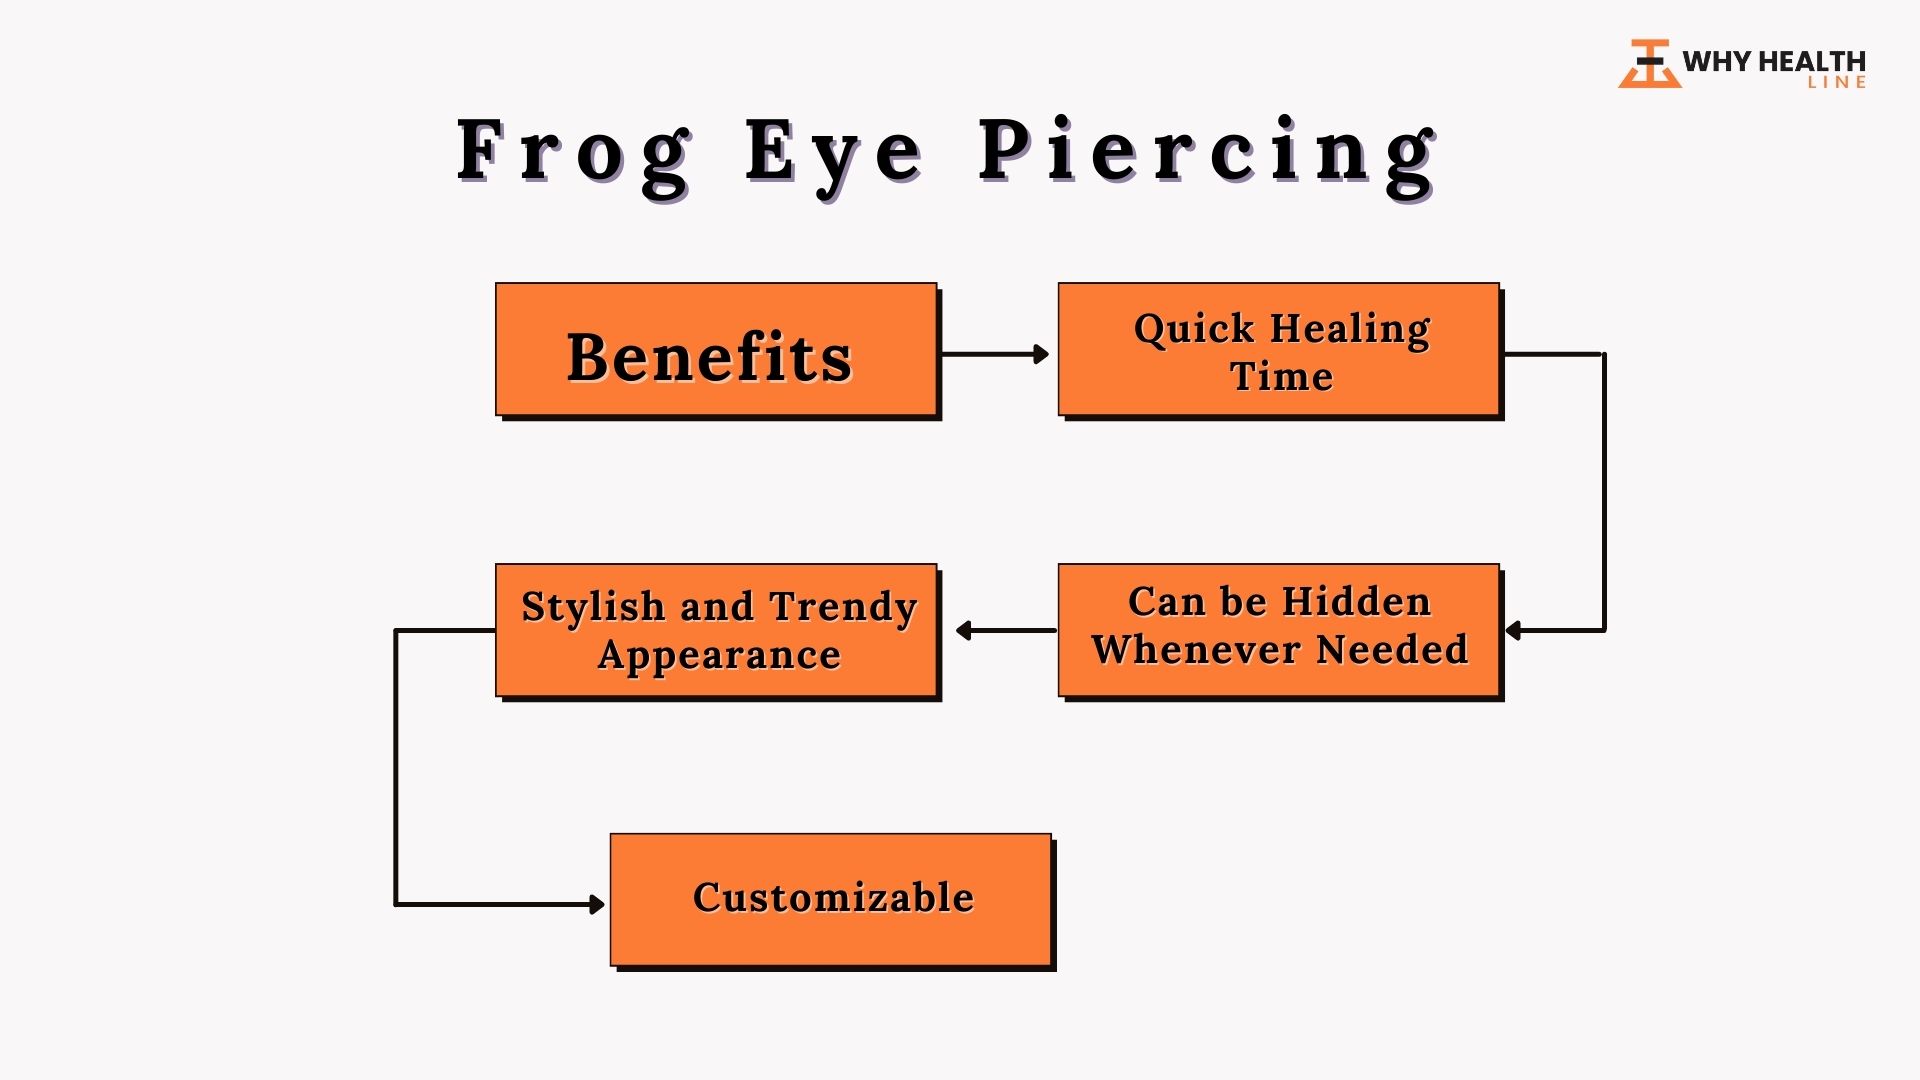 Frog Eye Piercing